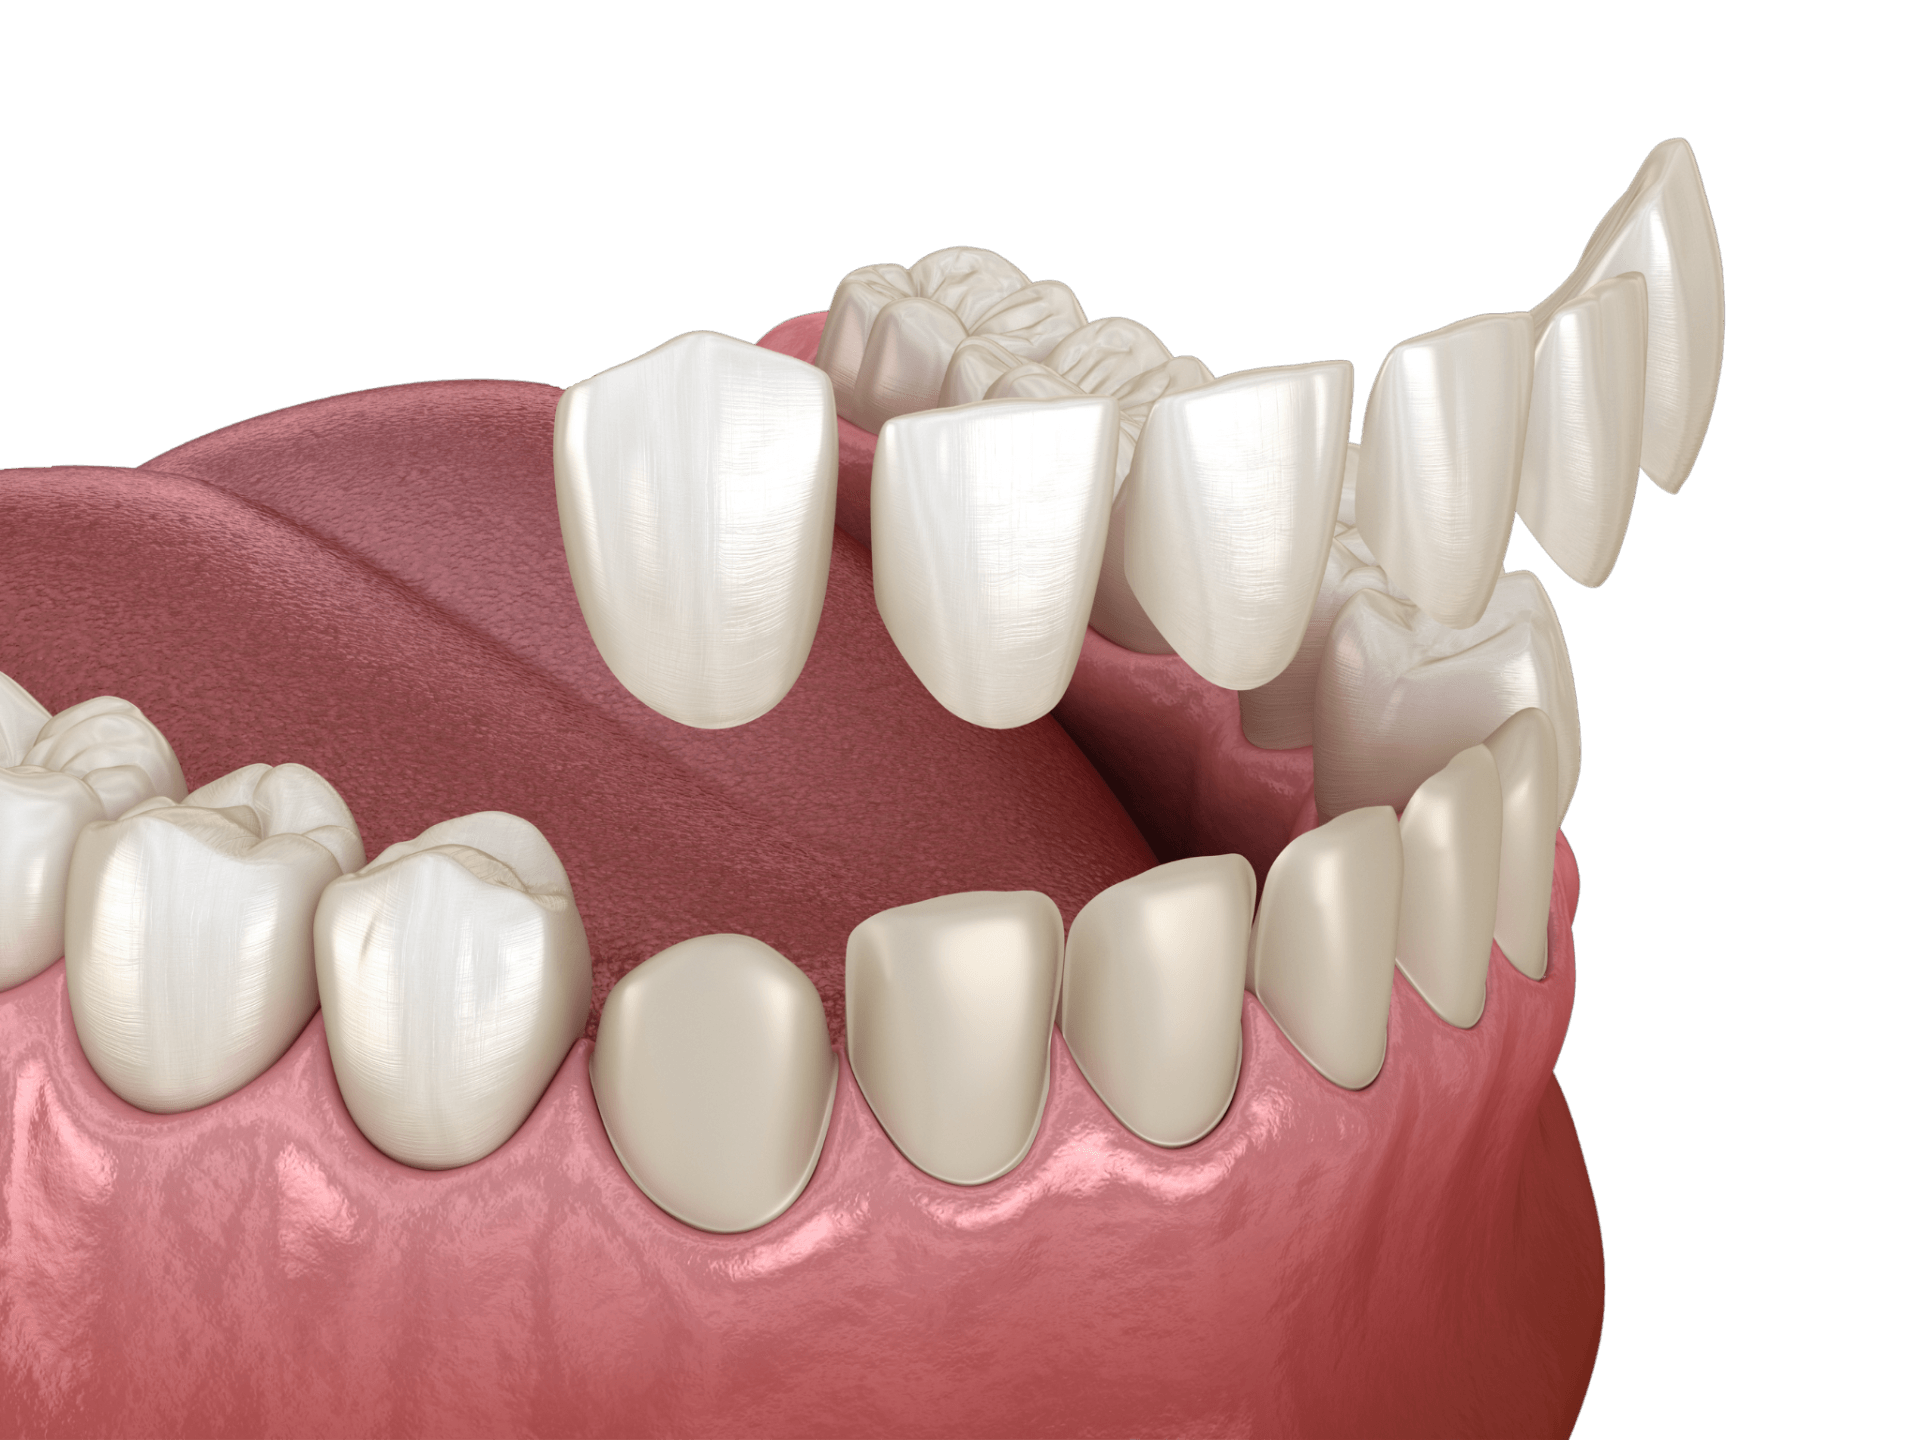 Graphic image of teeth with porcelain veneers